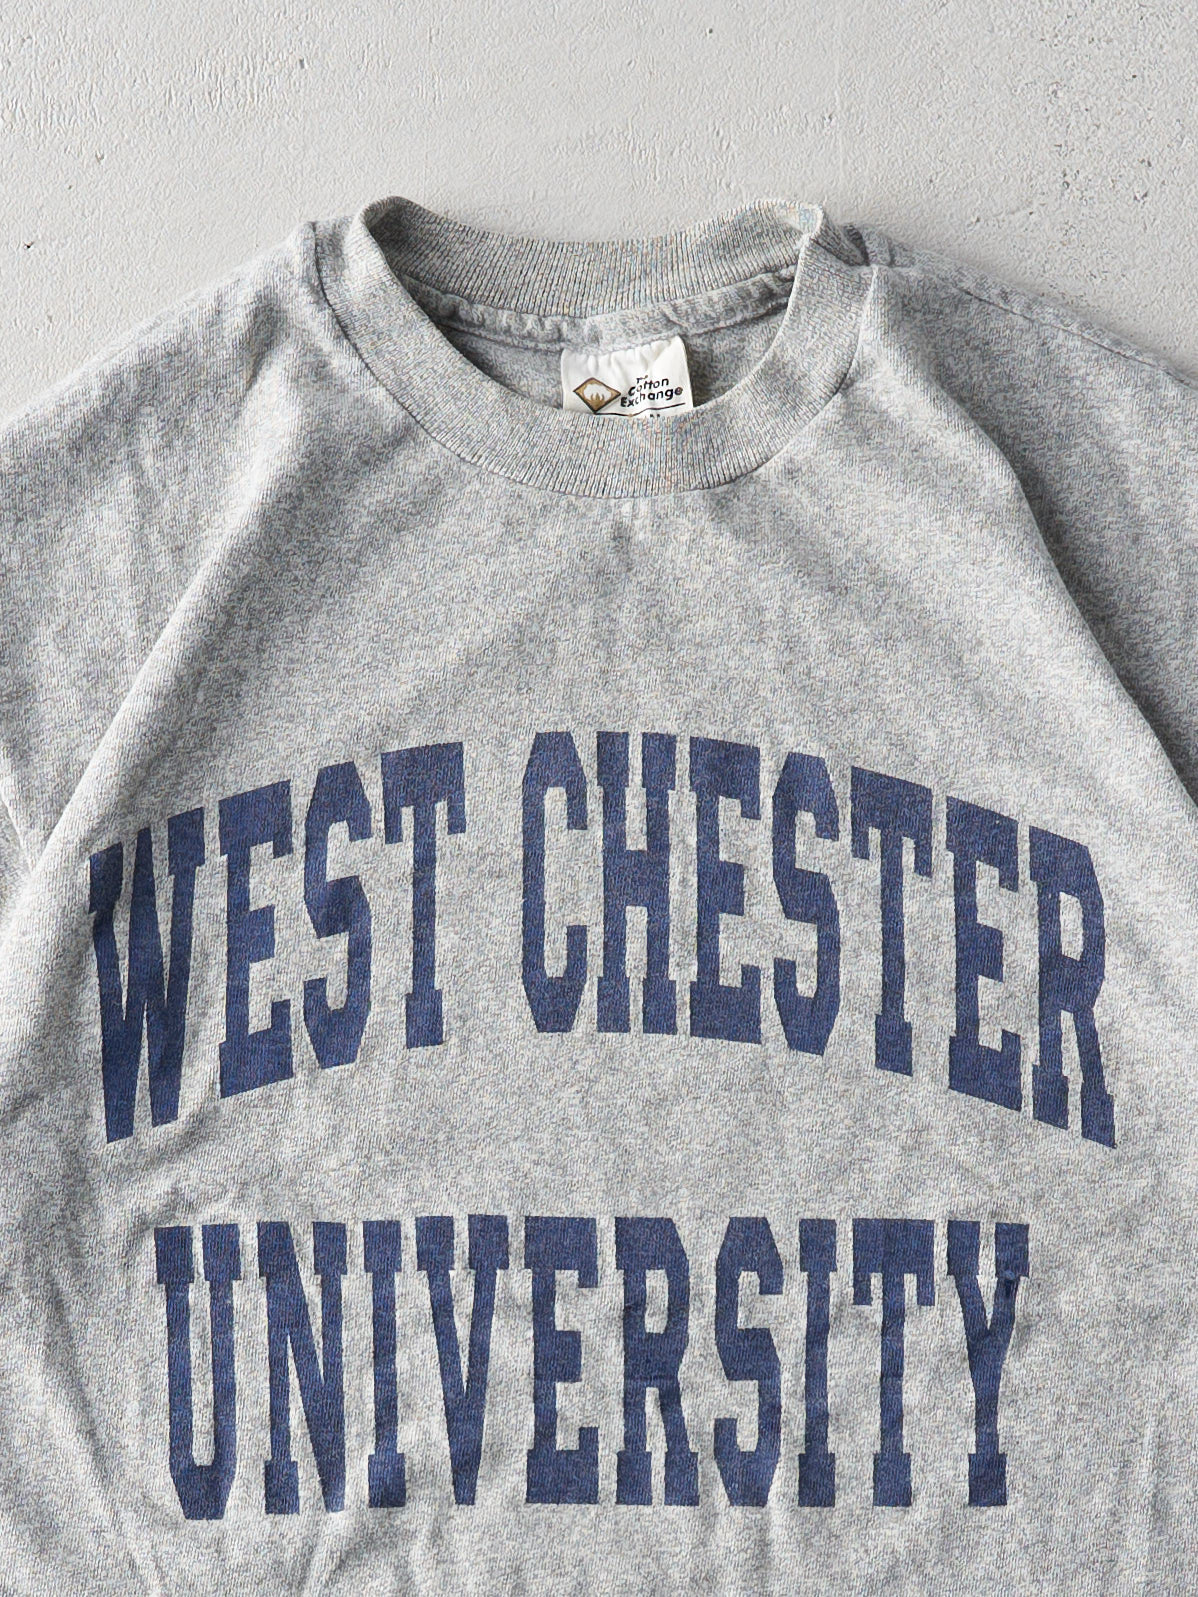 Vintage 90s Grey West Chester University Single Stitch Tee (S)